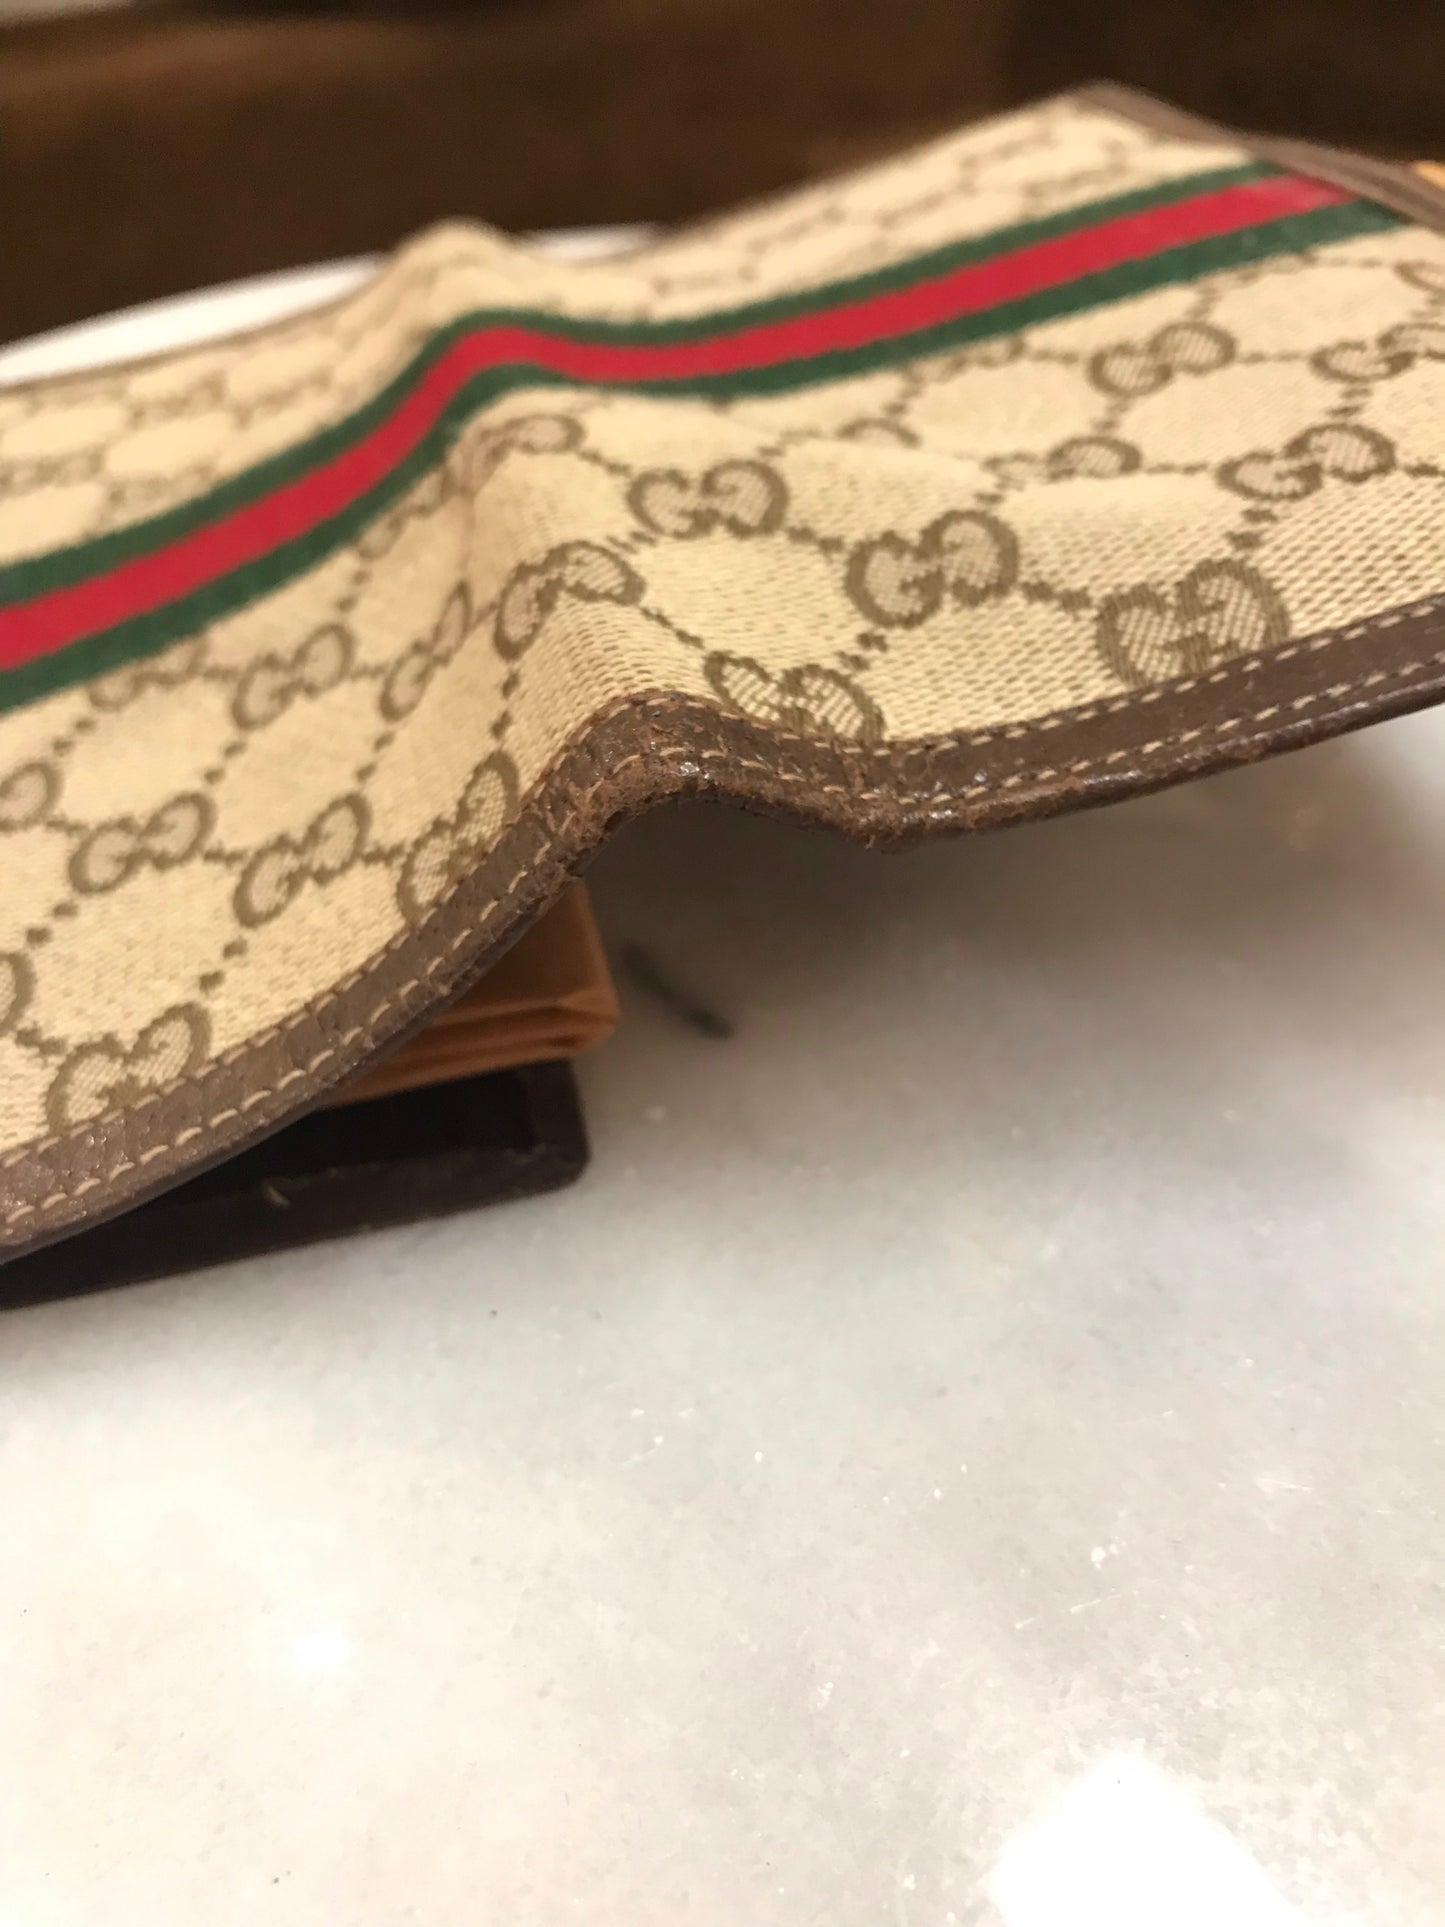 Vintage 1970s Gucci Wallet - Rare Horsebit Clasp